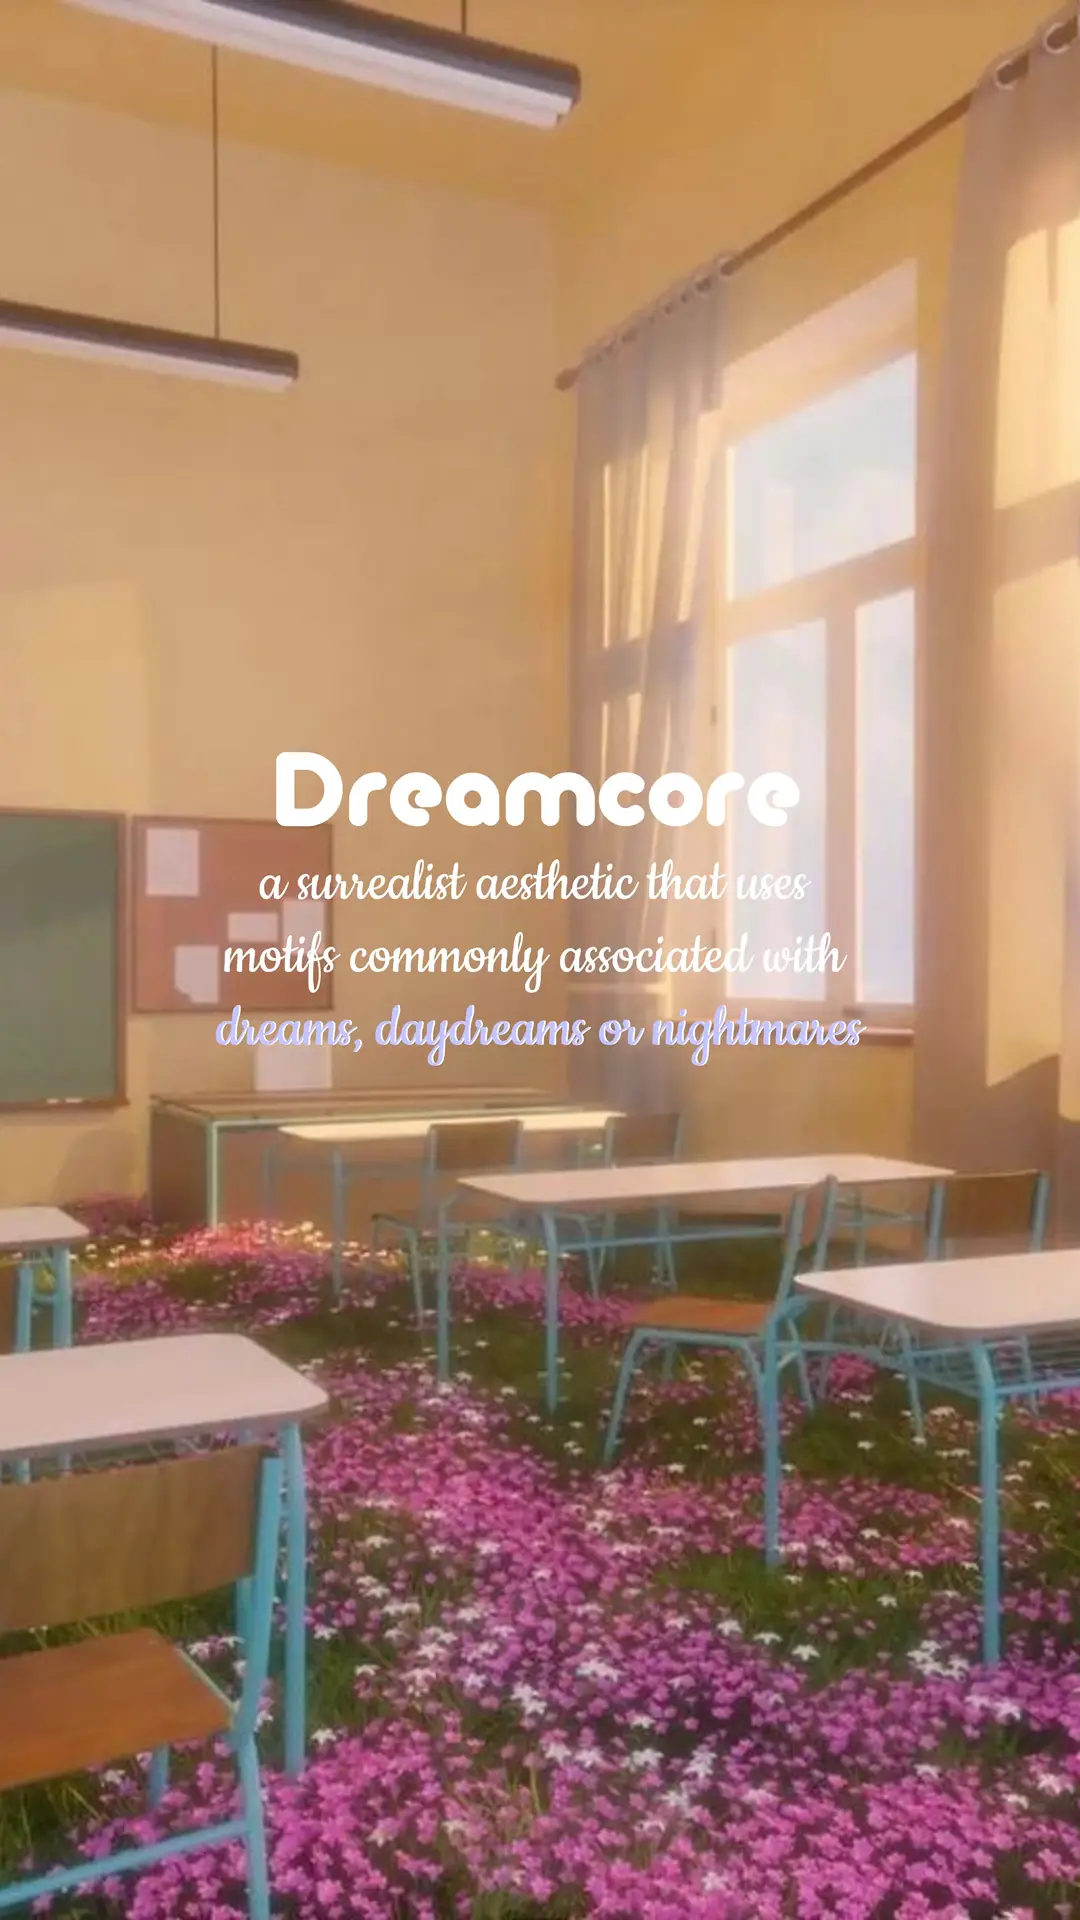 Dreamcore Wallpaper Explore more Aesthetic, Daydreams, Dream, Dreamcore,  Images wallpaper. https…